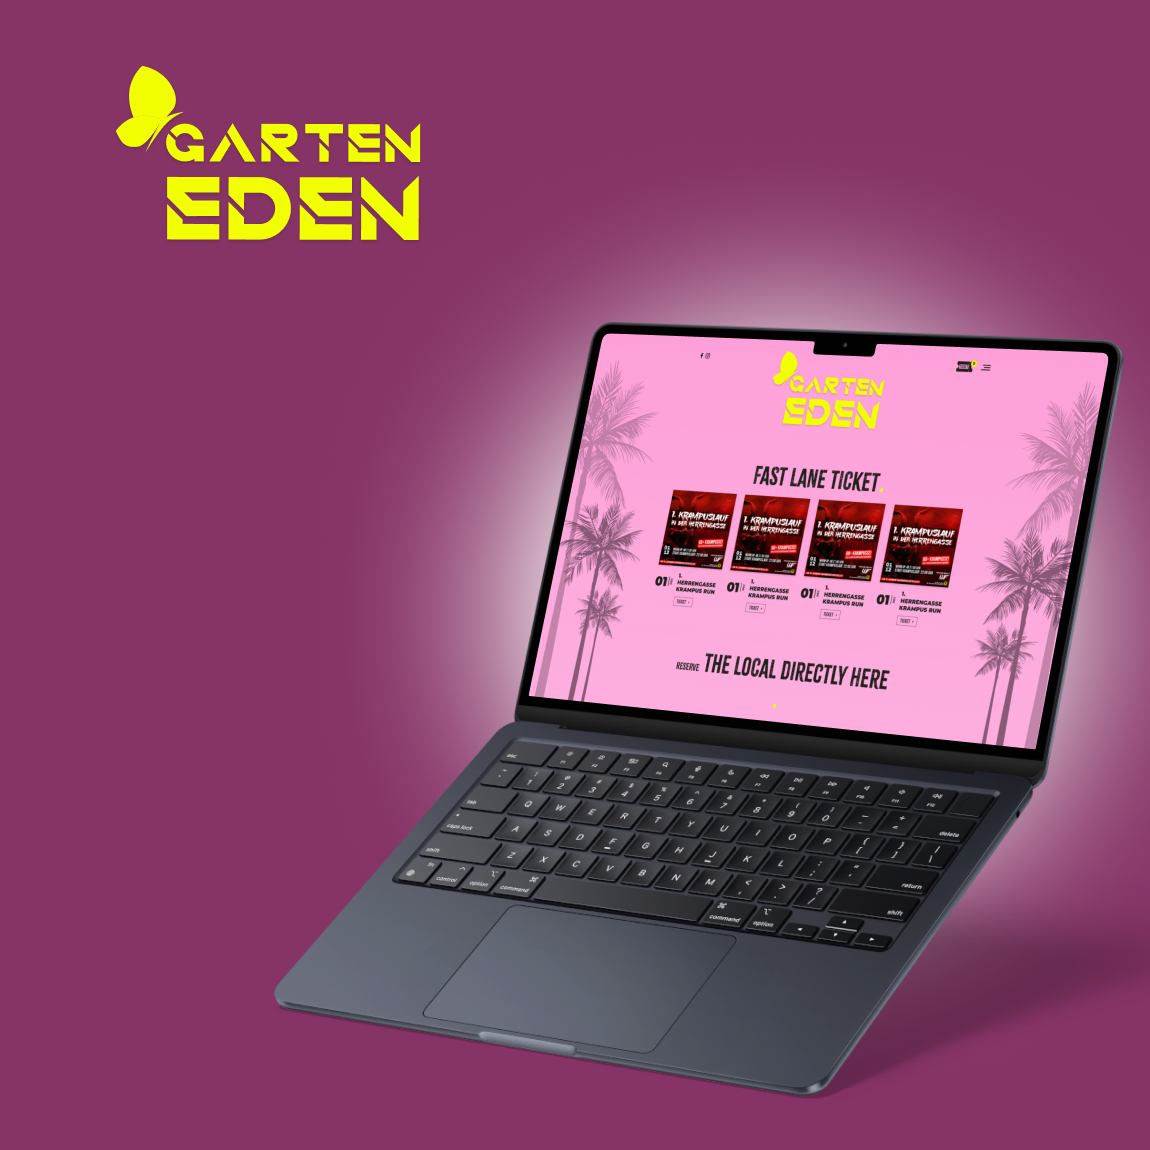 Garten Eden project